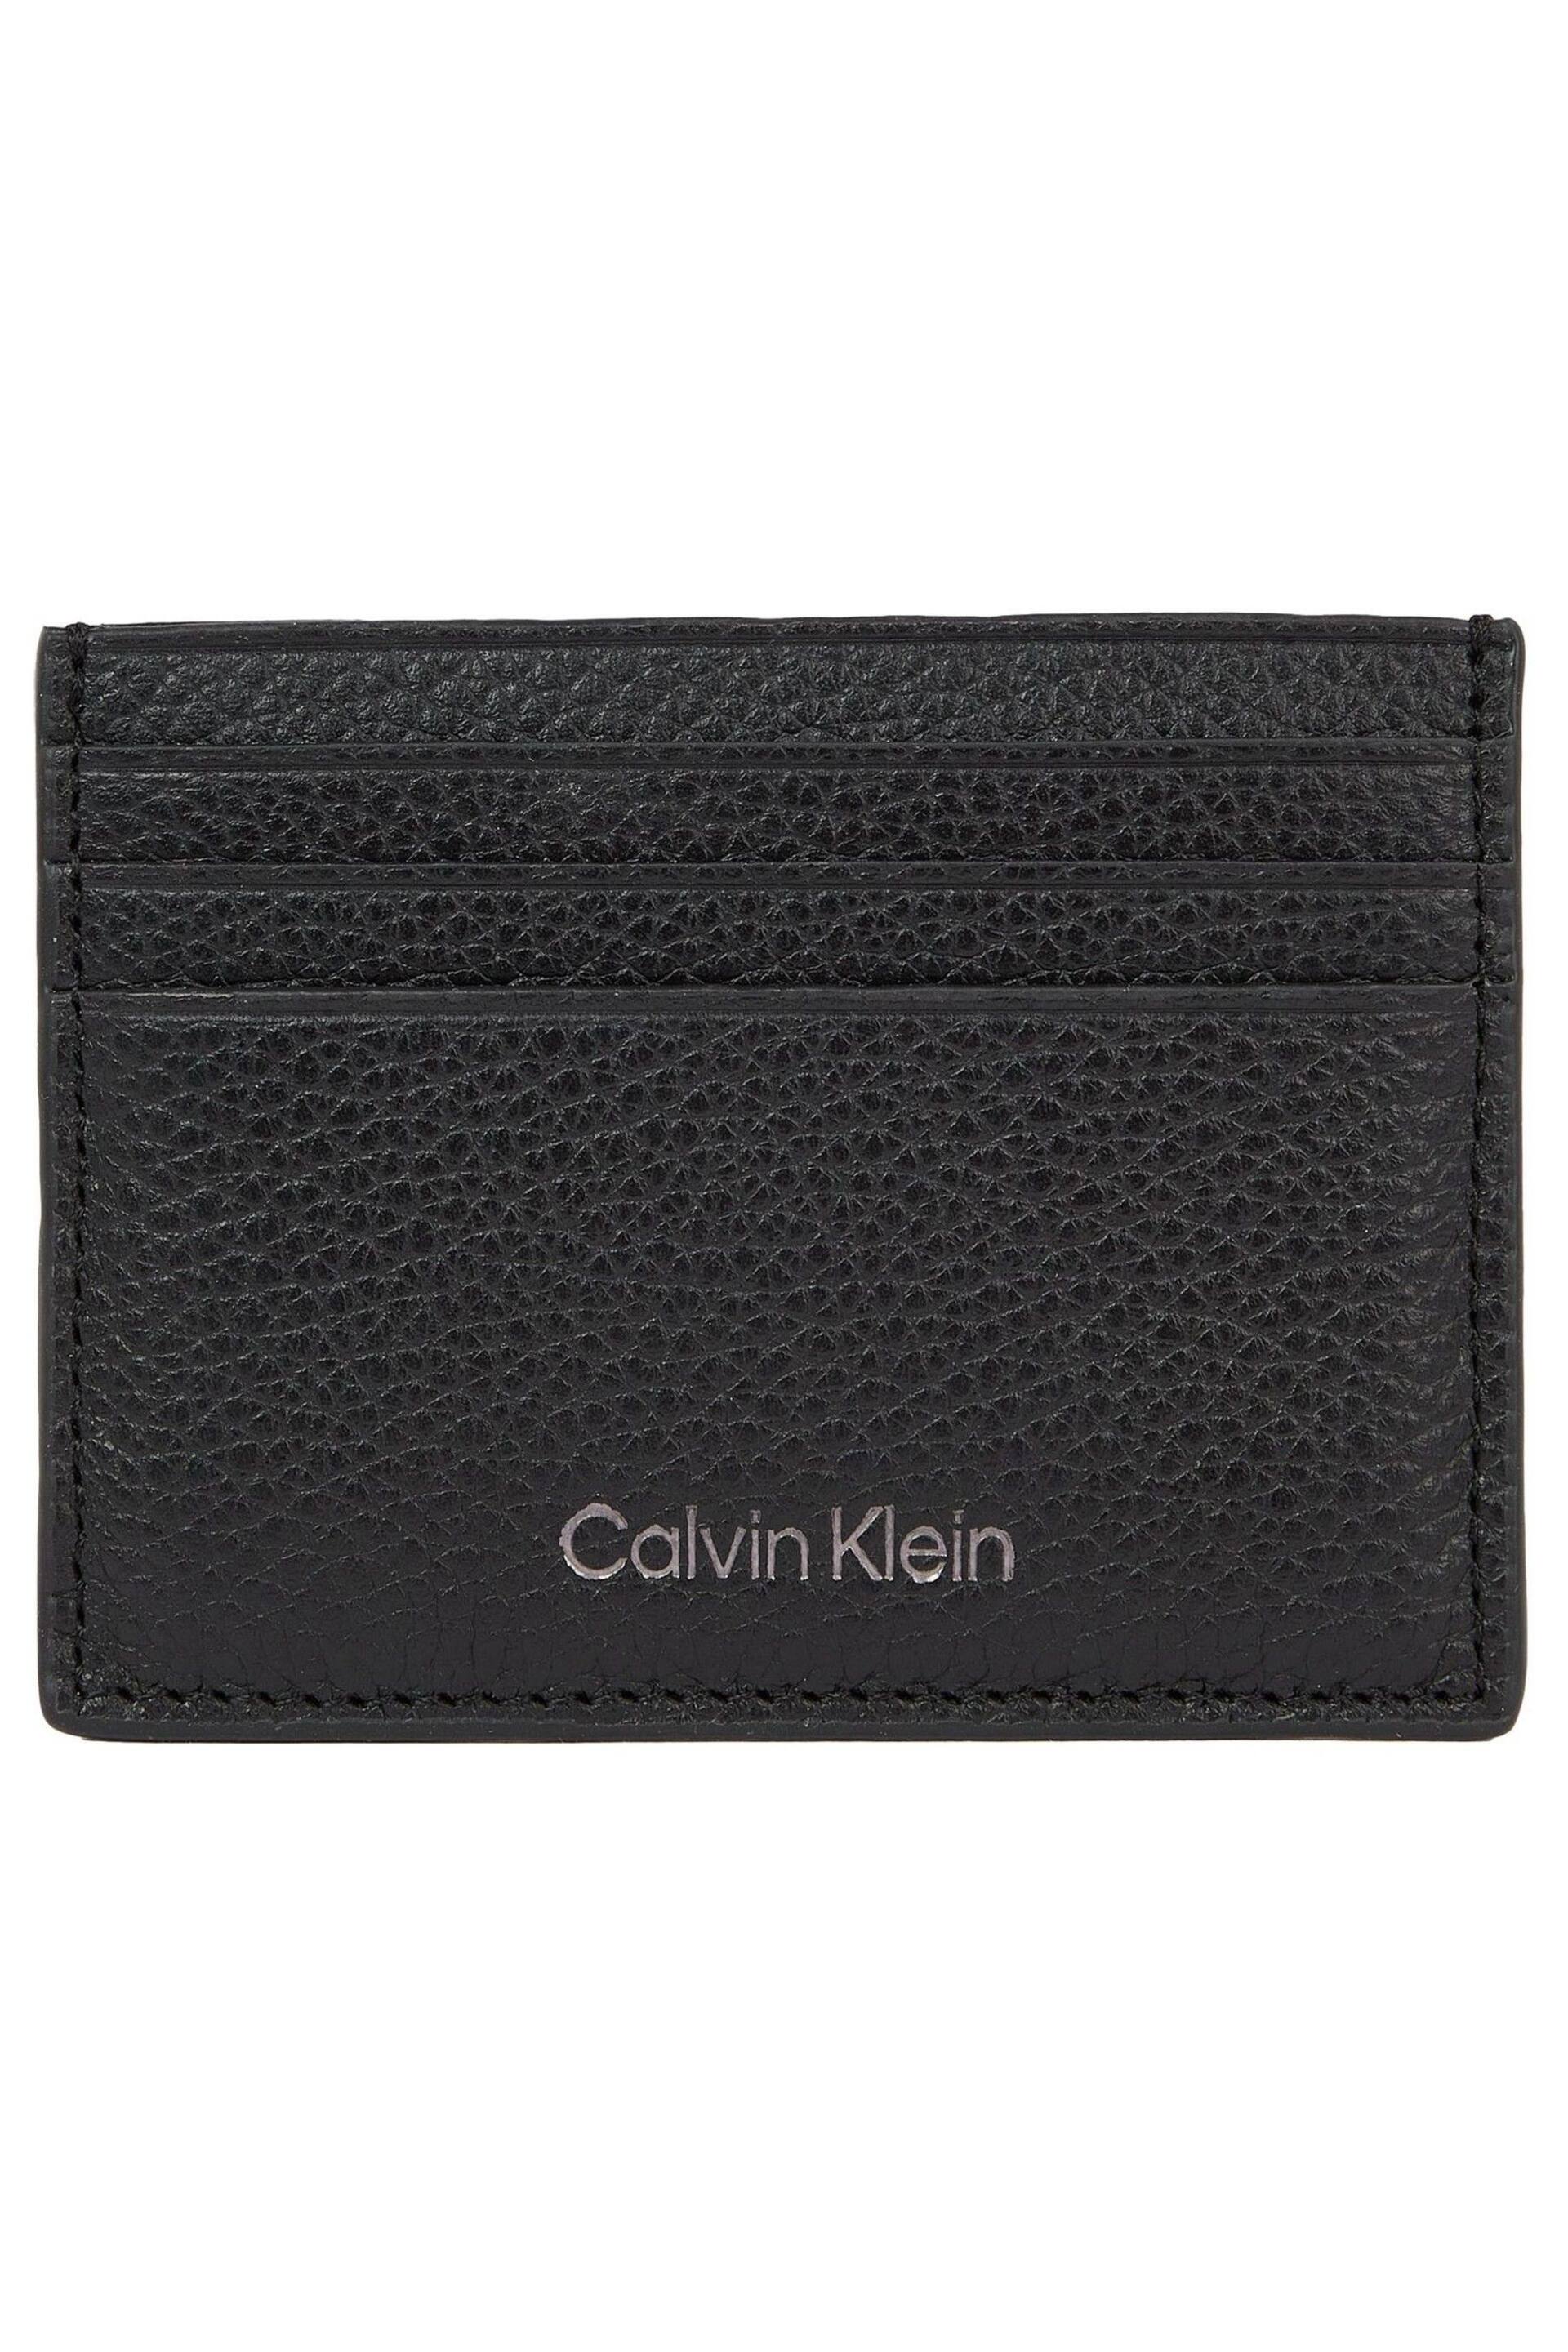 Calvin Klein Black Warmth Leather Card Holder - Image 1 of 3